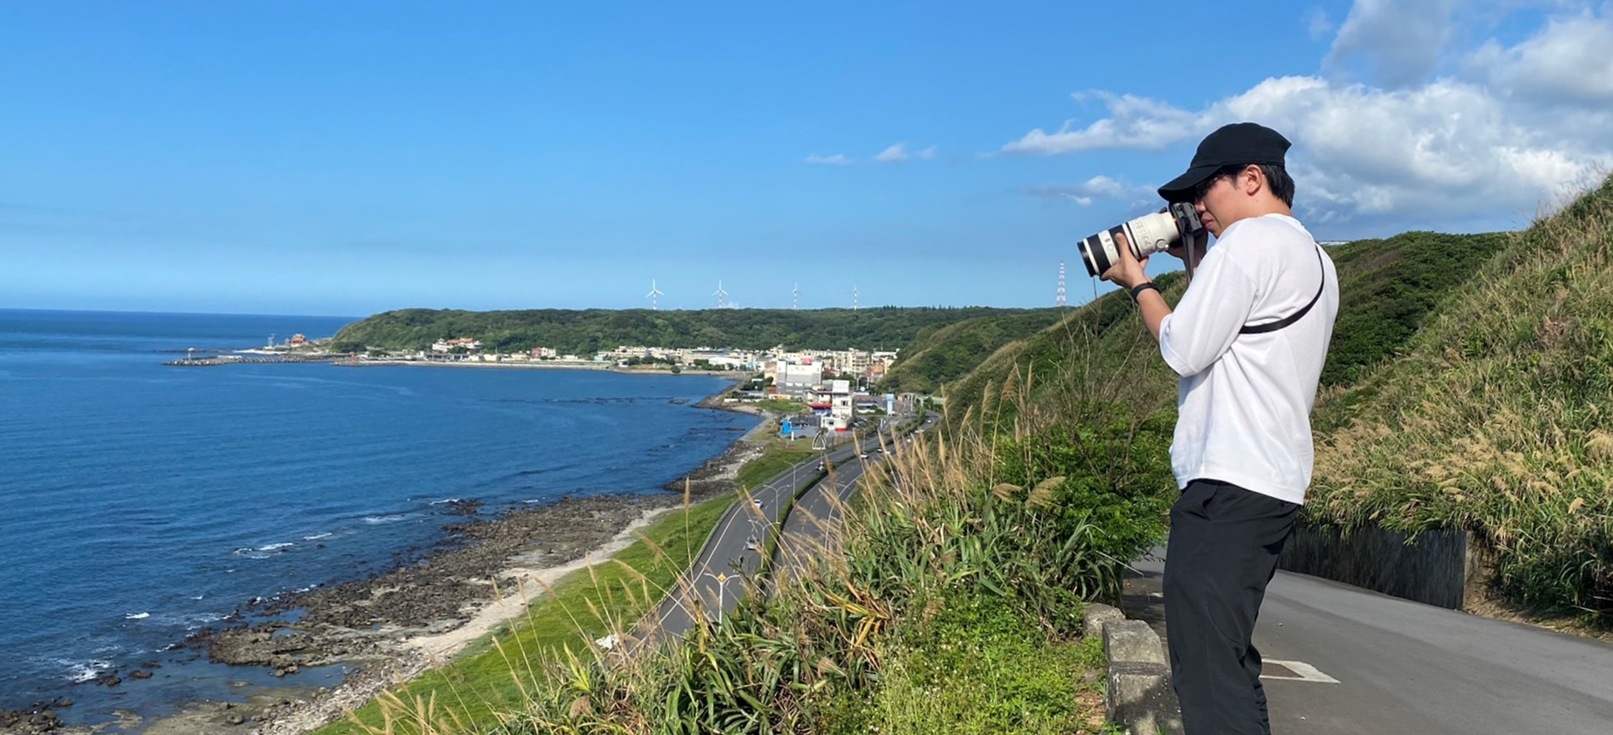 Photographic observer Liu Yuan-tsan takes photos along the sea